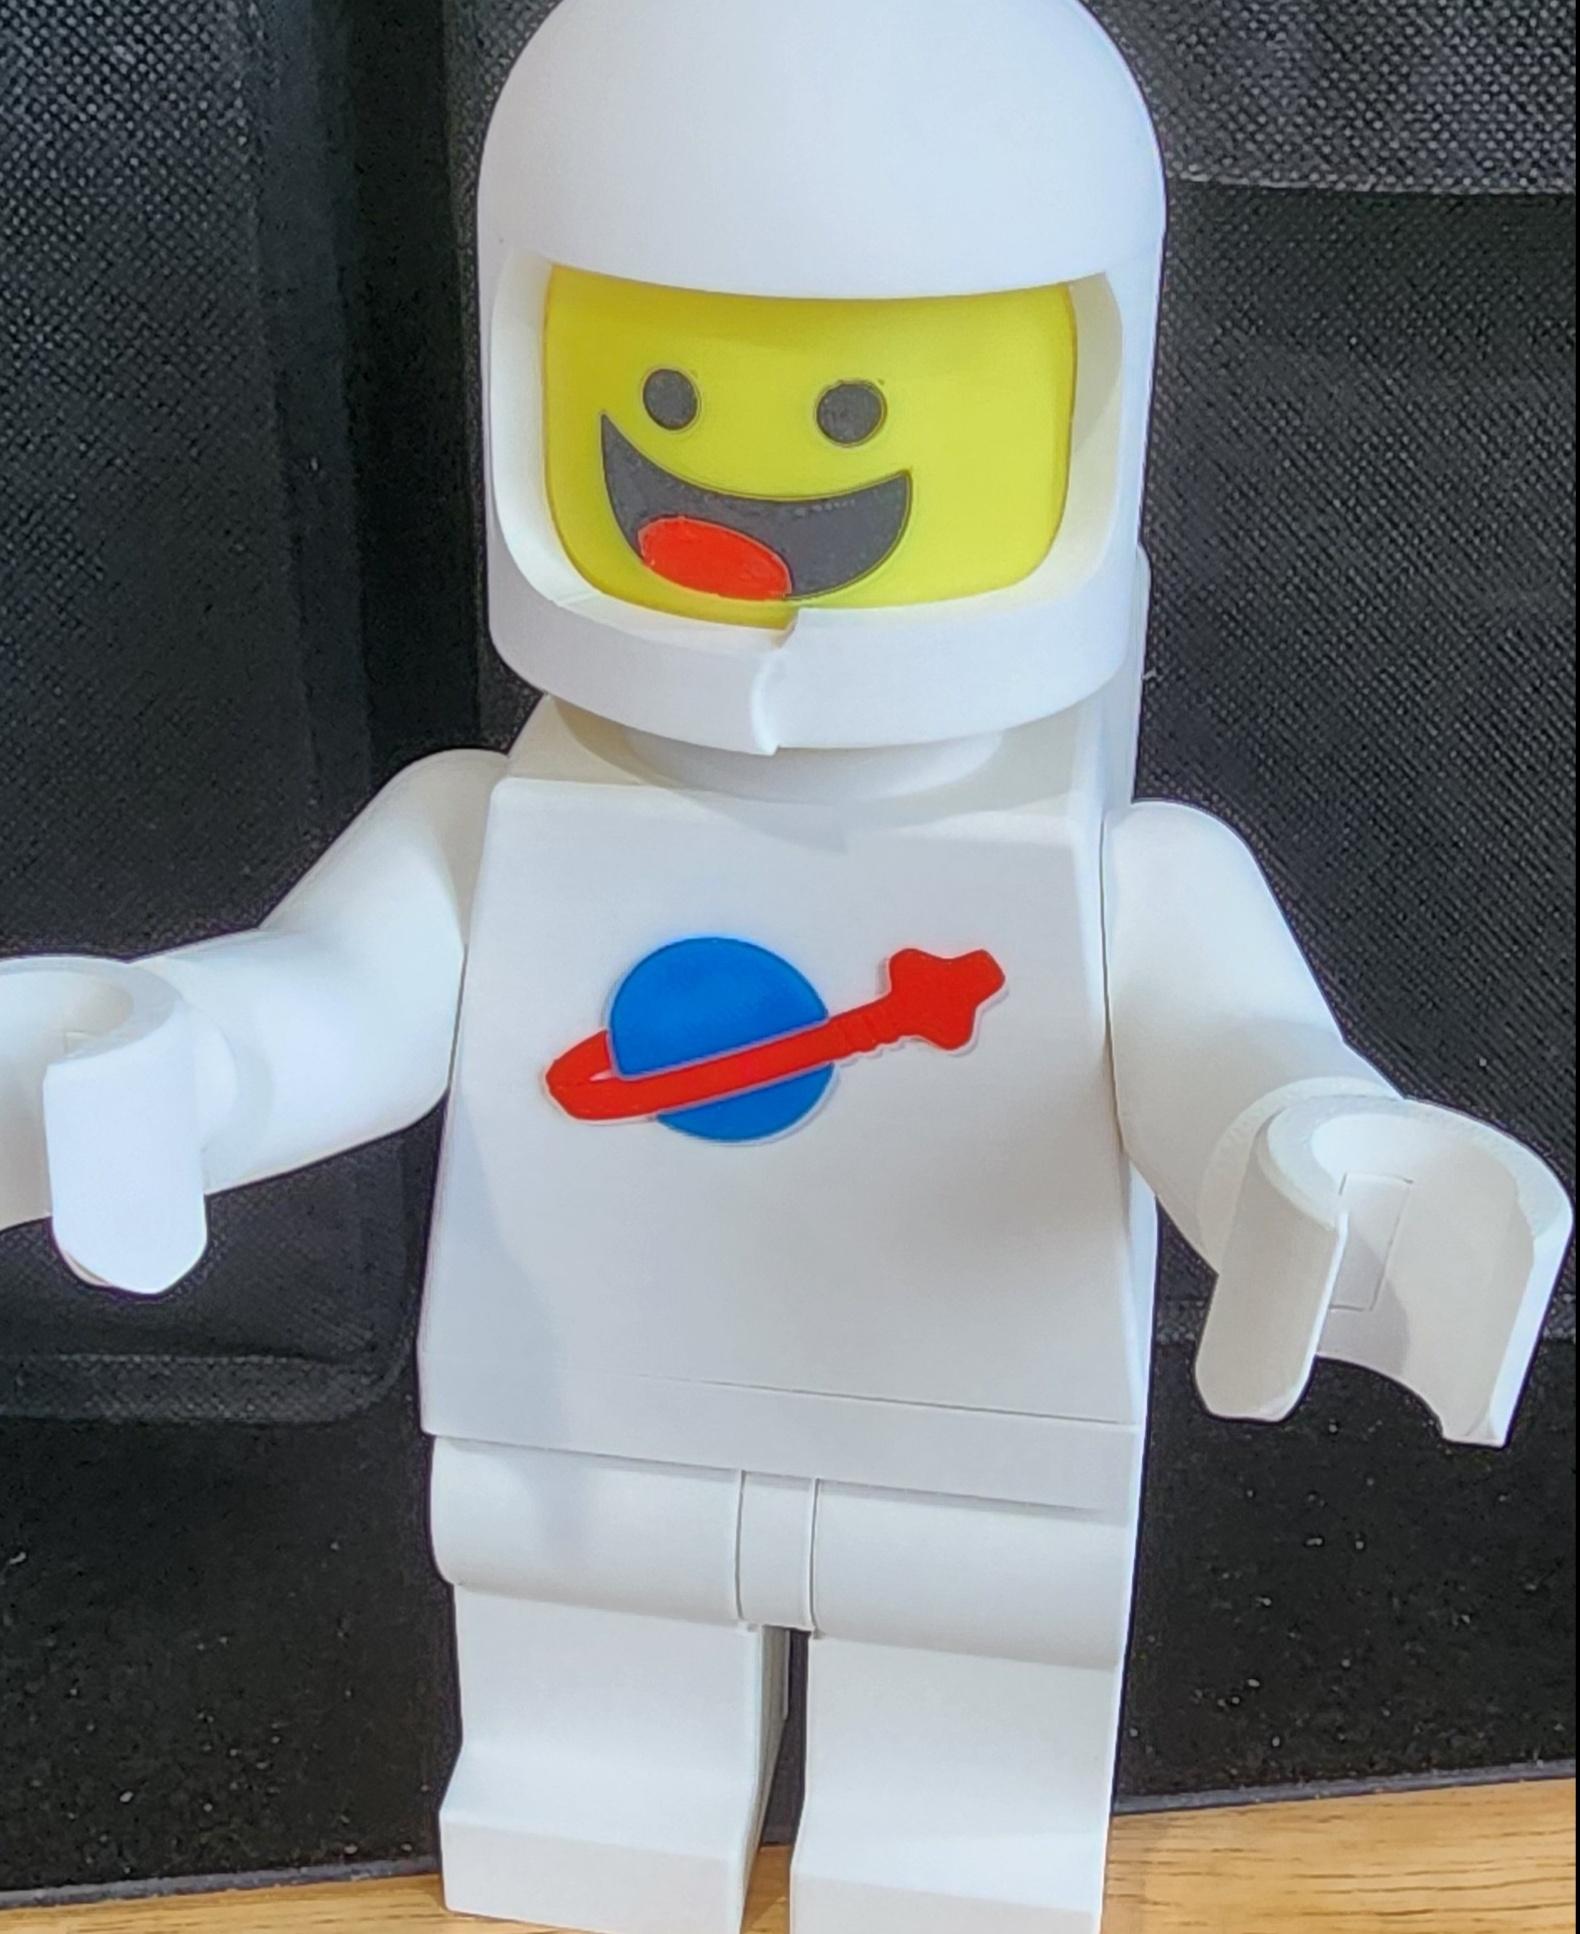 Benny's Head and Helmet (6:1 LEGO-inspired brick figure, NO MMU/AMS, NO supports, NO glue) - Excellent model, excellent designer - 3d model